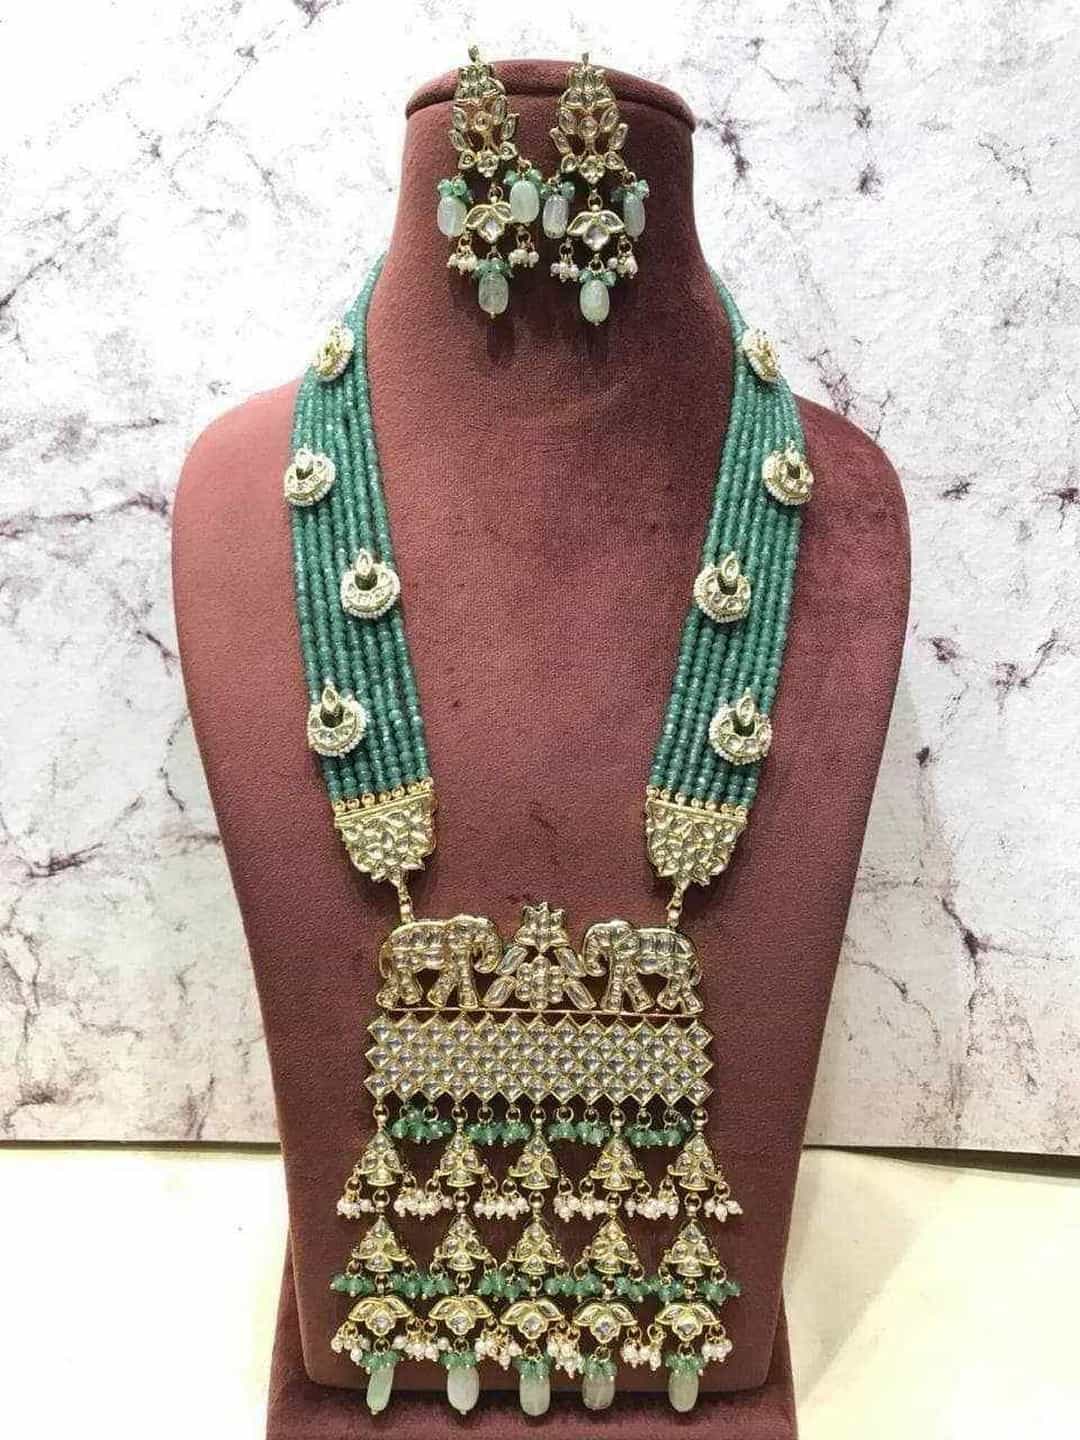 Ishhaara Light Green Elephant Pendant Necklace